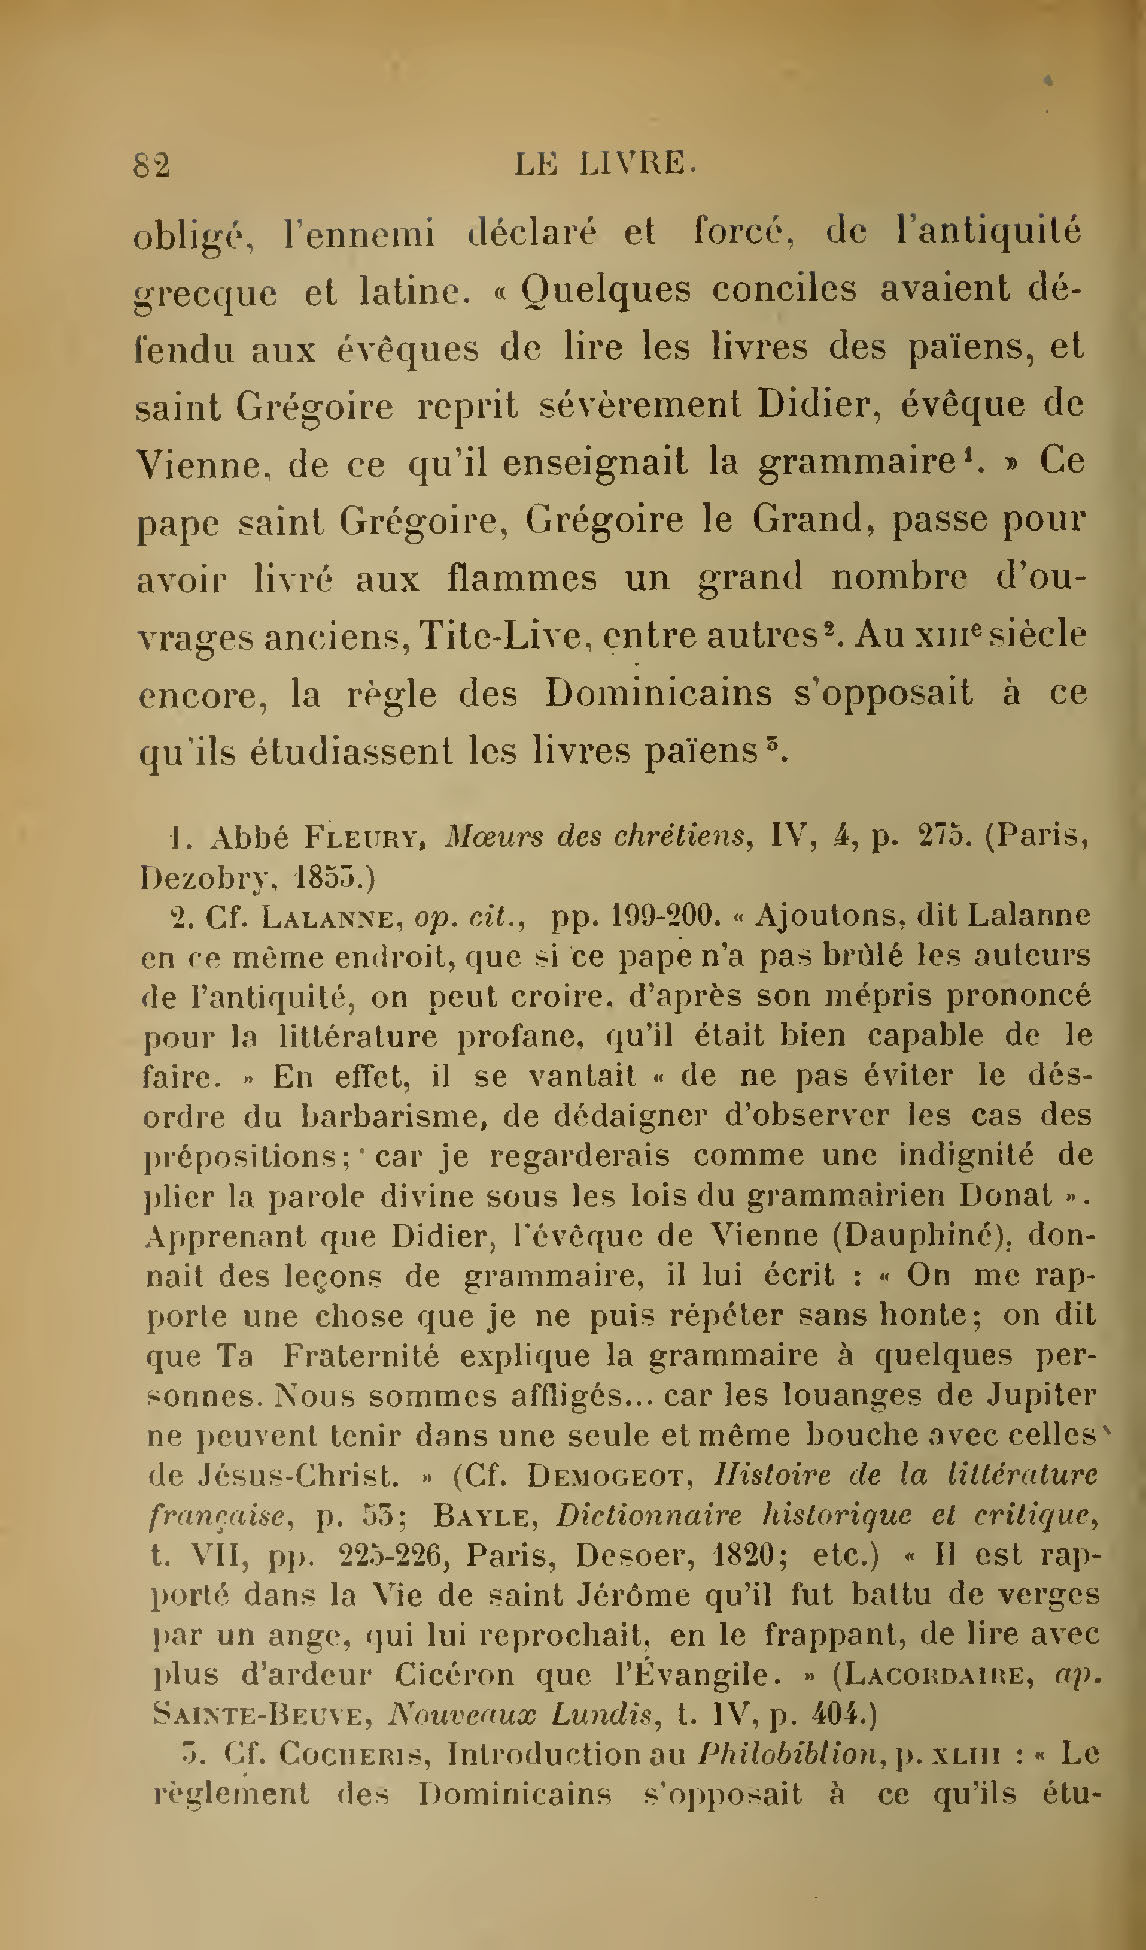 Albert Cim, Le Livre, t. I, p. 82.